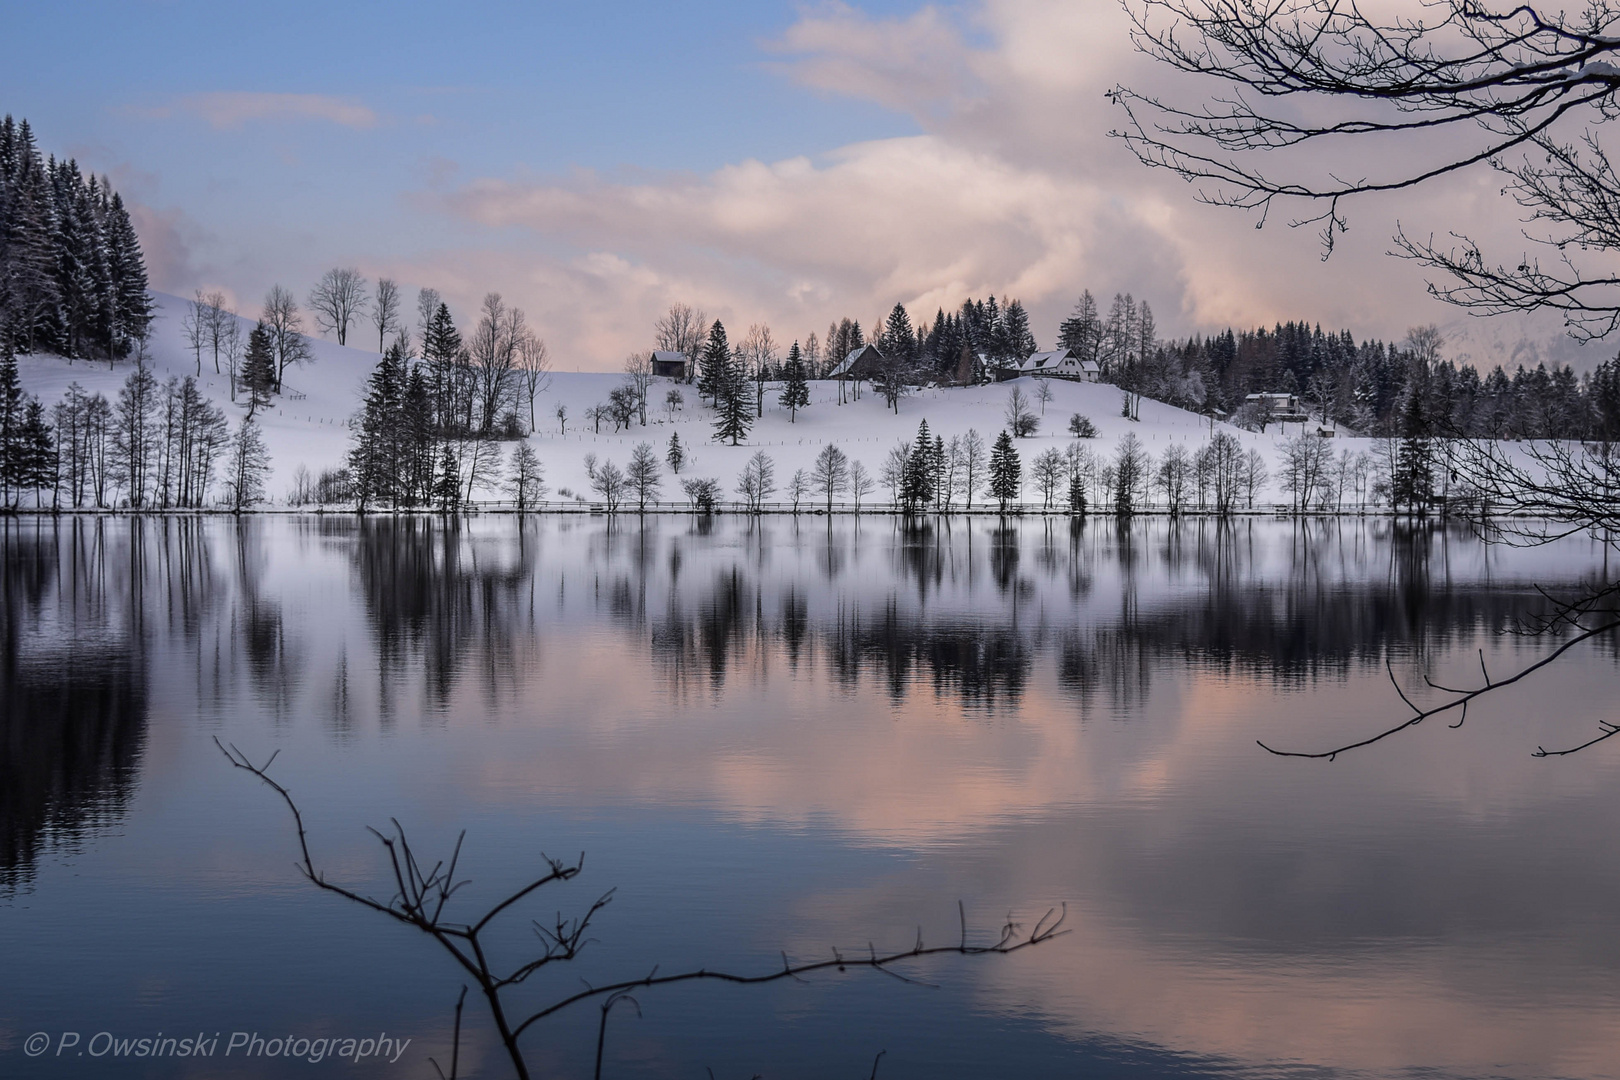 Landscape in a winter mood